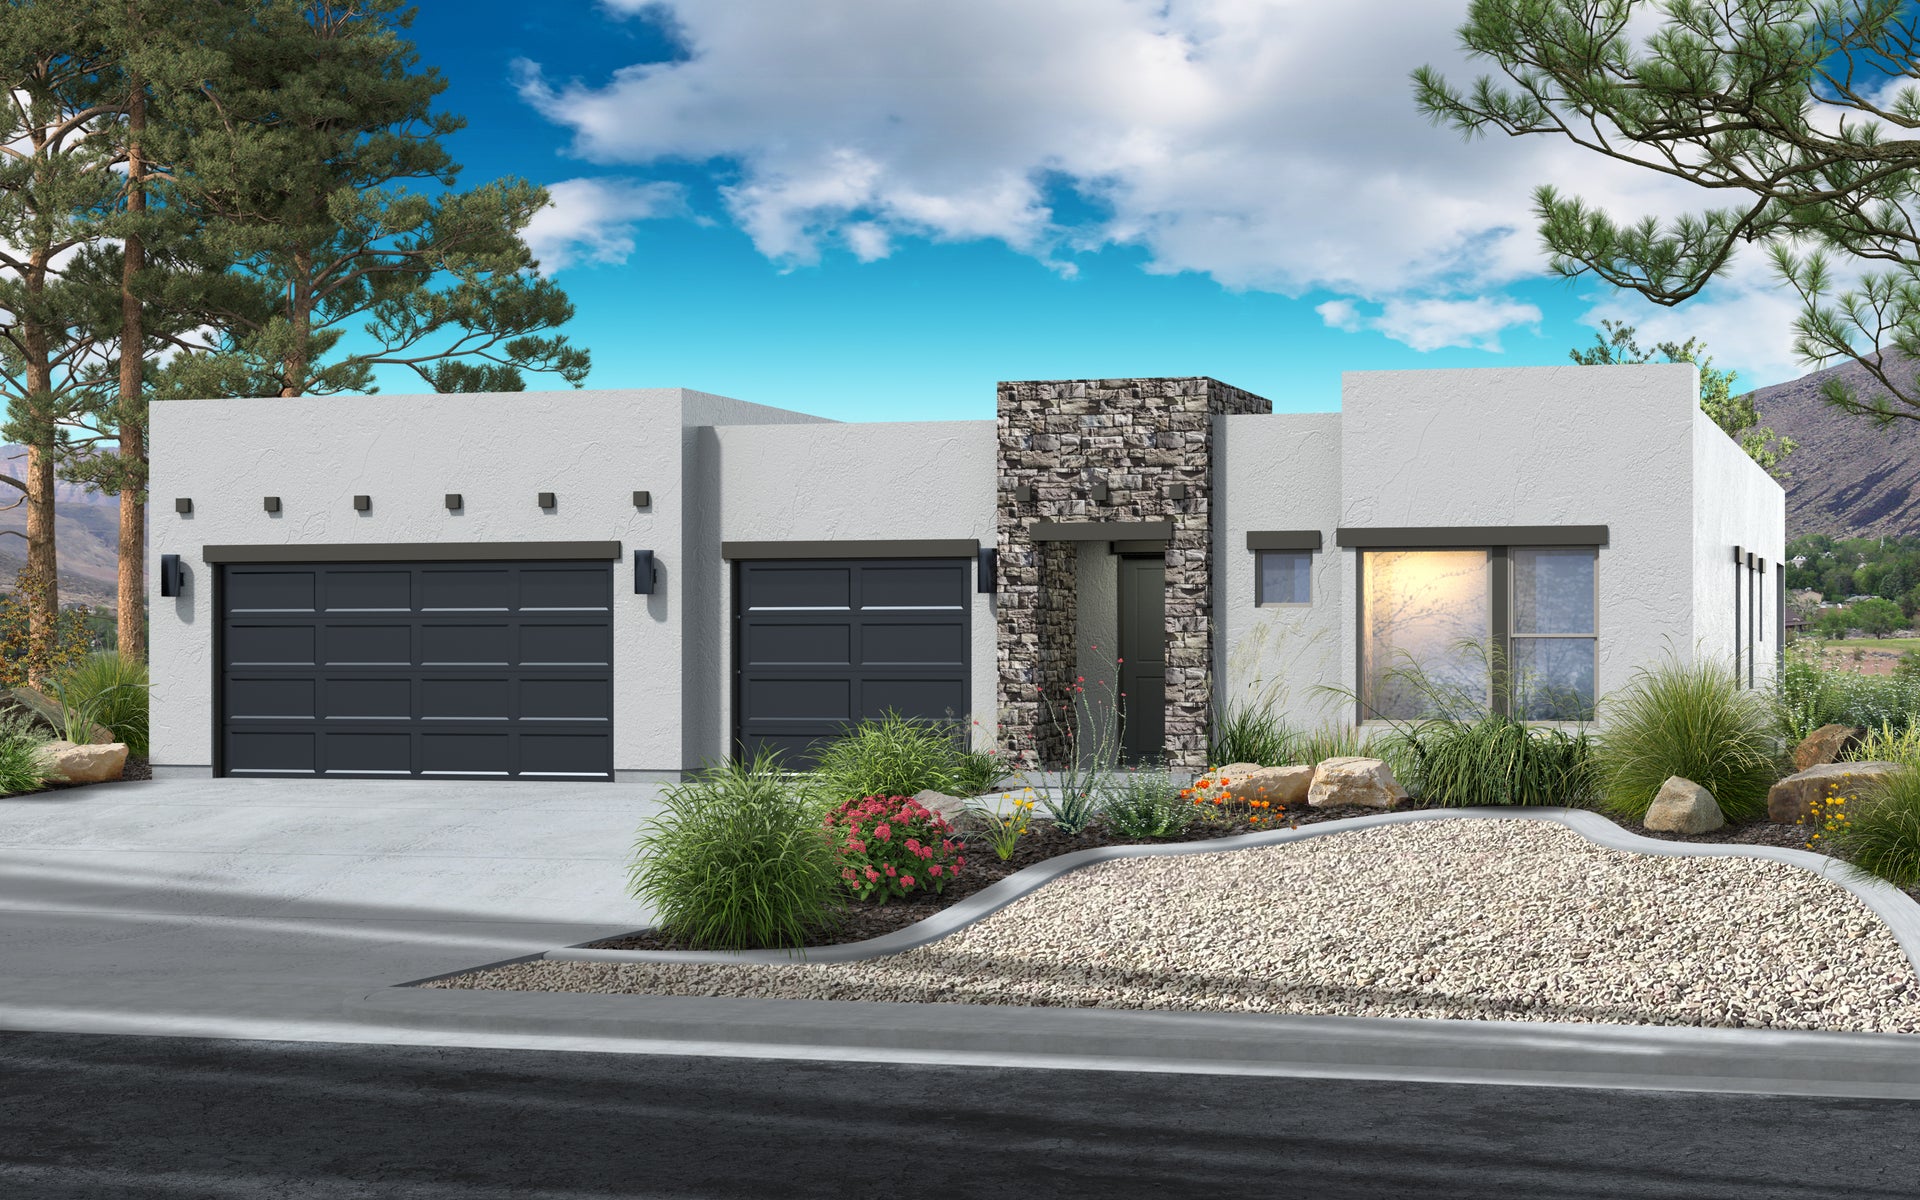 The Zenith Desert Contemporary new home floorplan in Utah